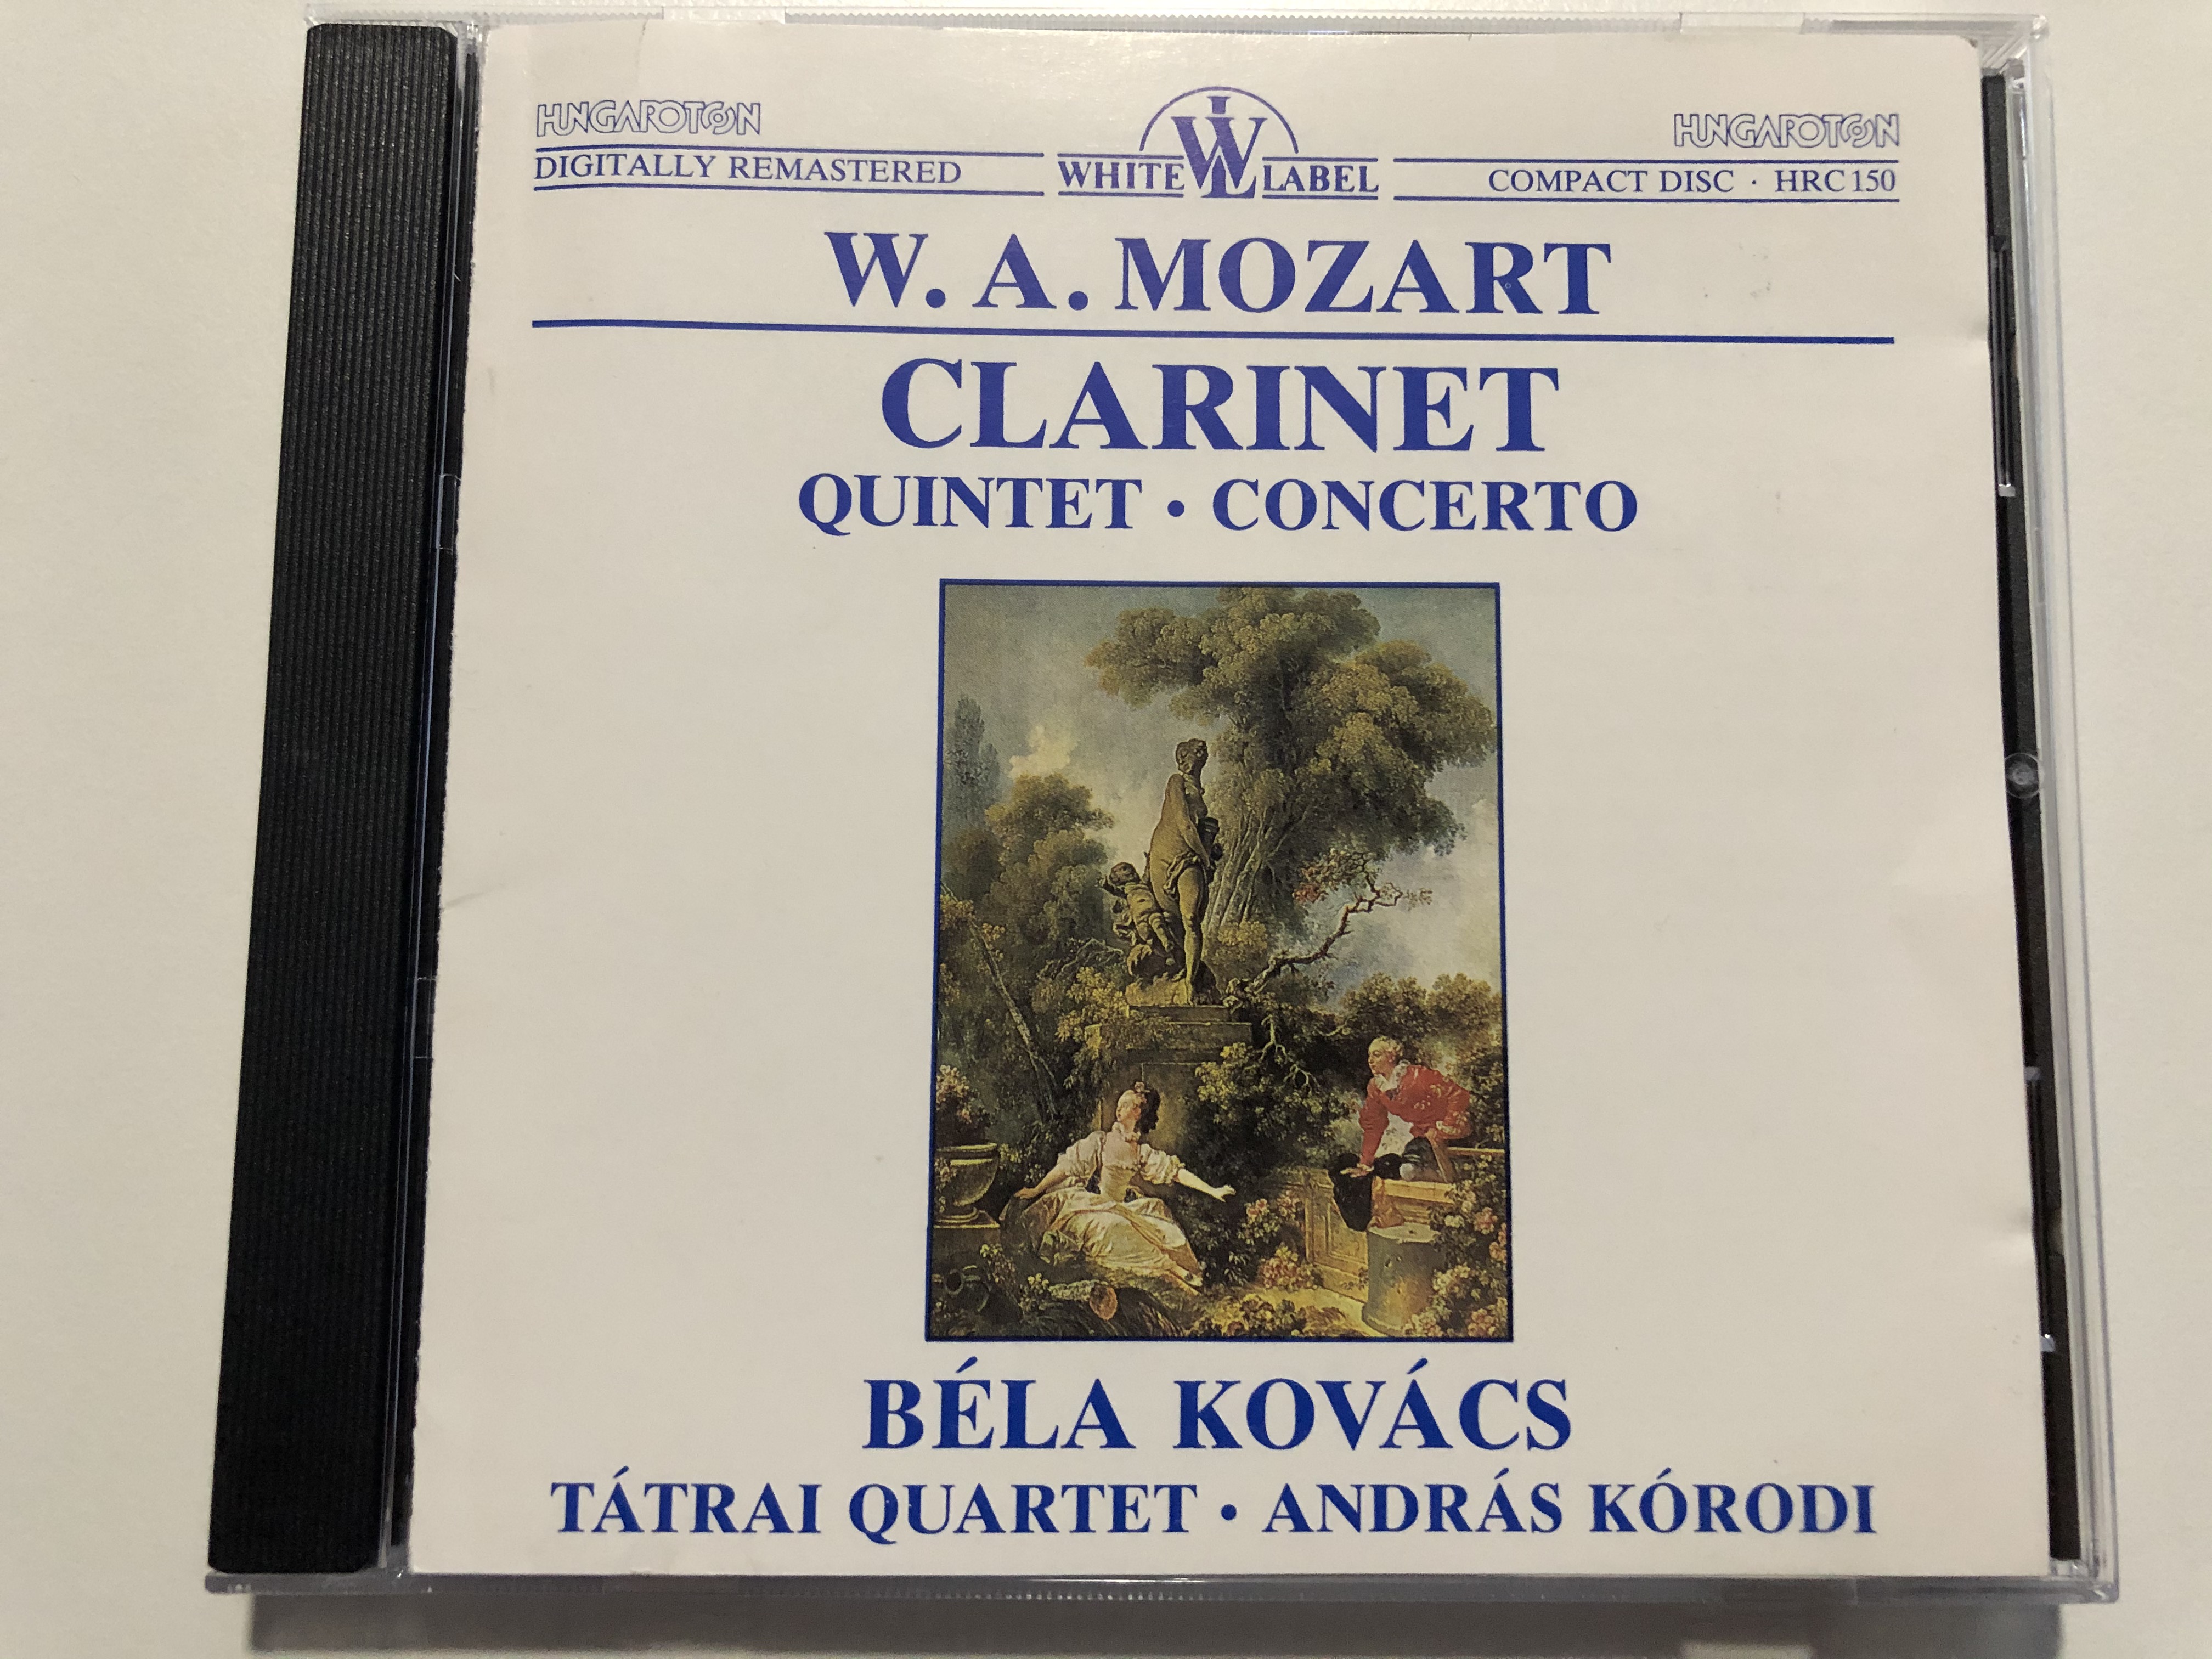 w.-a.-mozart-clarinet-quintet-concerto-bela-kovacs-tatrai-quartet-andras-korodi-white-label-audio-cd-1990-stereo-hrc-150-1-.jpg